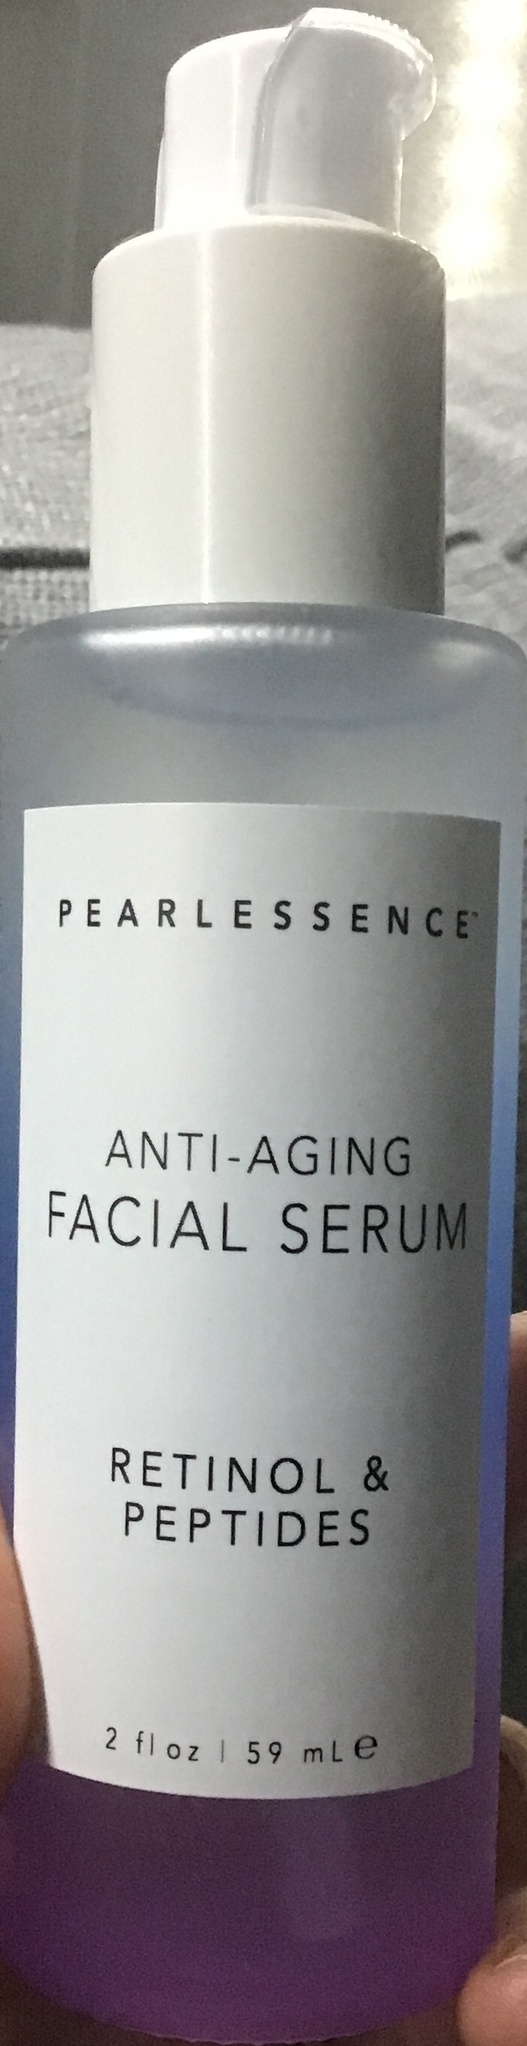 Pearlessence Anti-aging Facial Serum